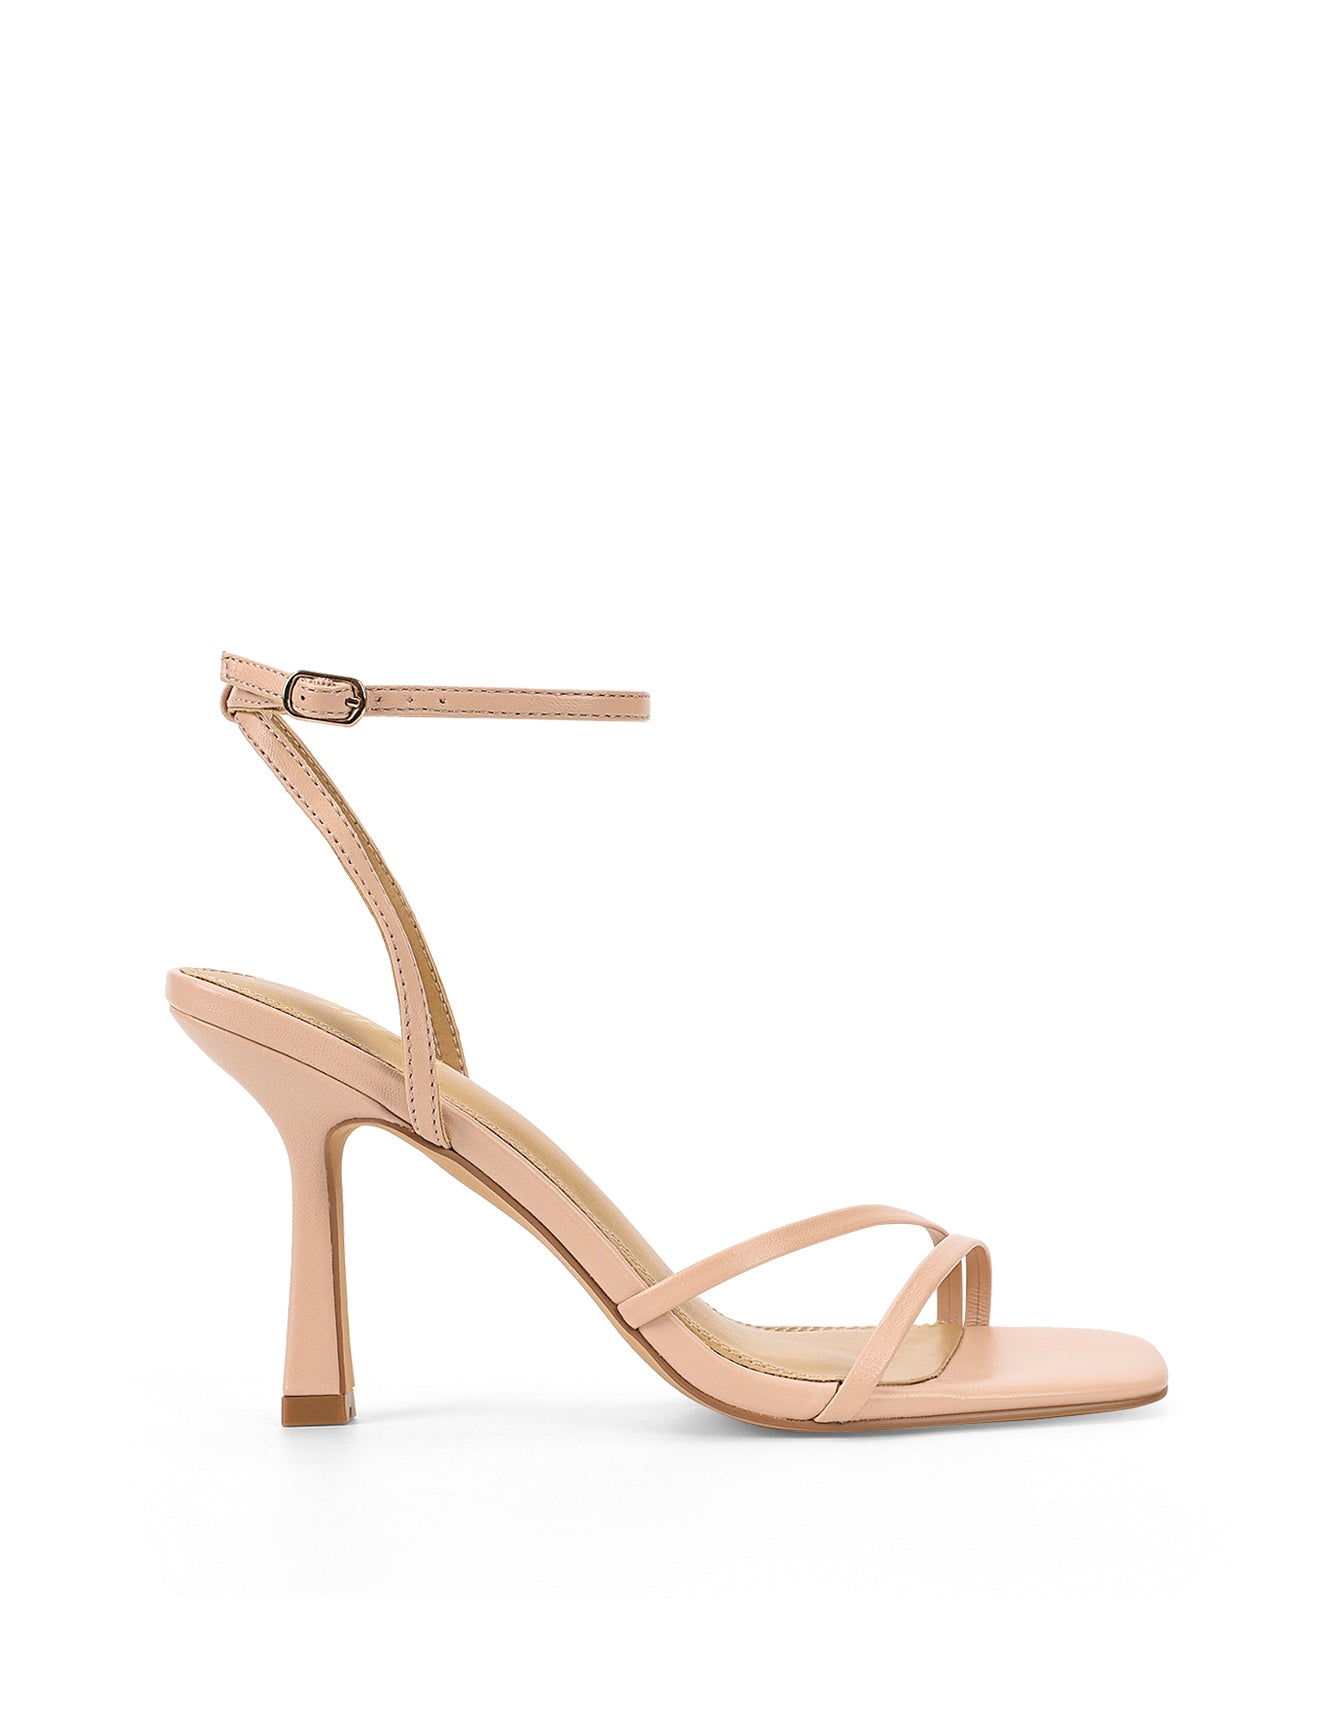 Women's nude leather high heel stiletto sandal